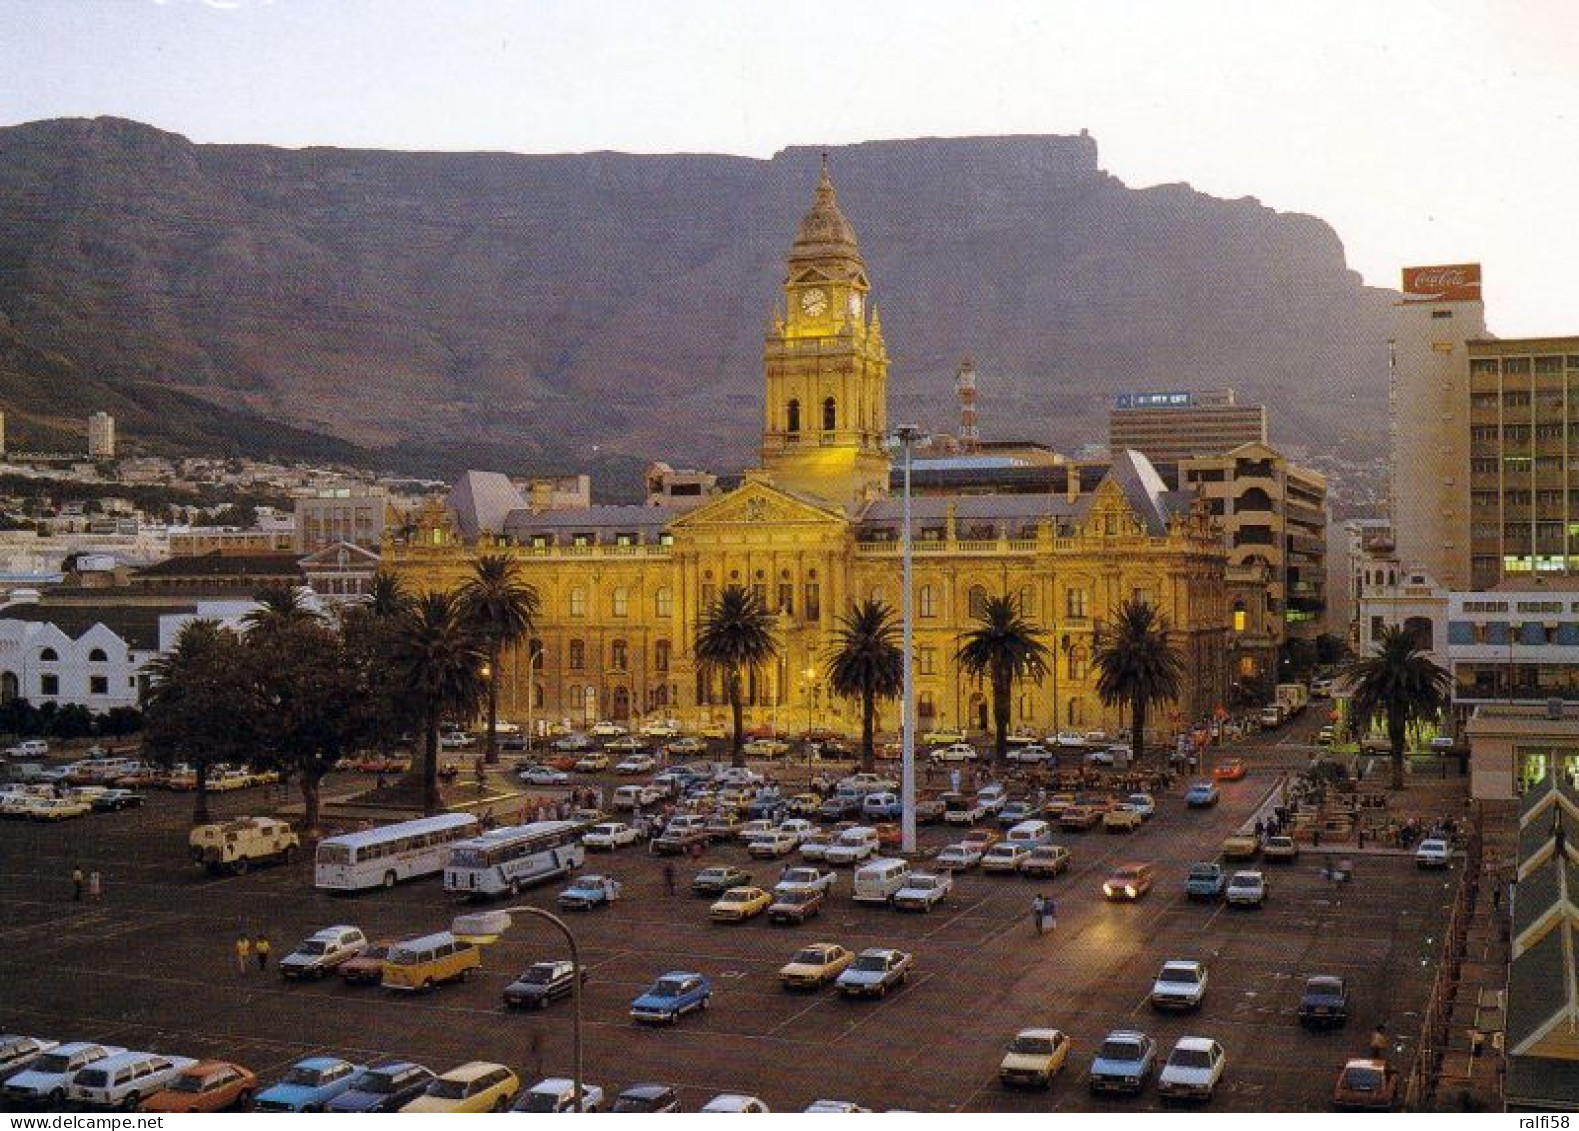 1 AK Südafrika * Das Alte Rathaus In Kapstadt * The Old City Hall Of Cape Town - Erbaut 1905 * - Südafrika